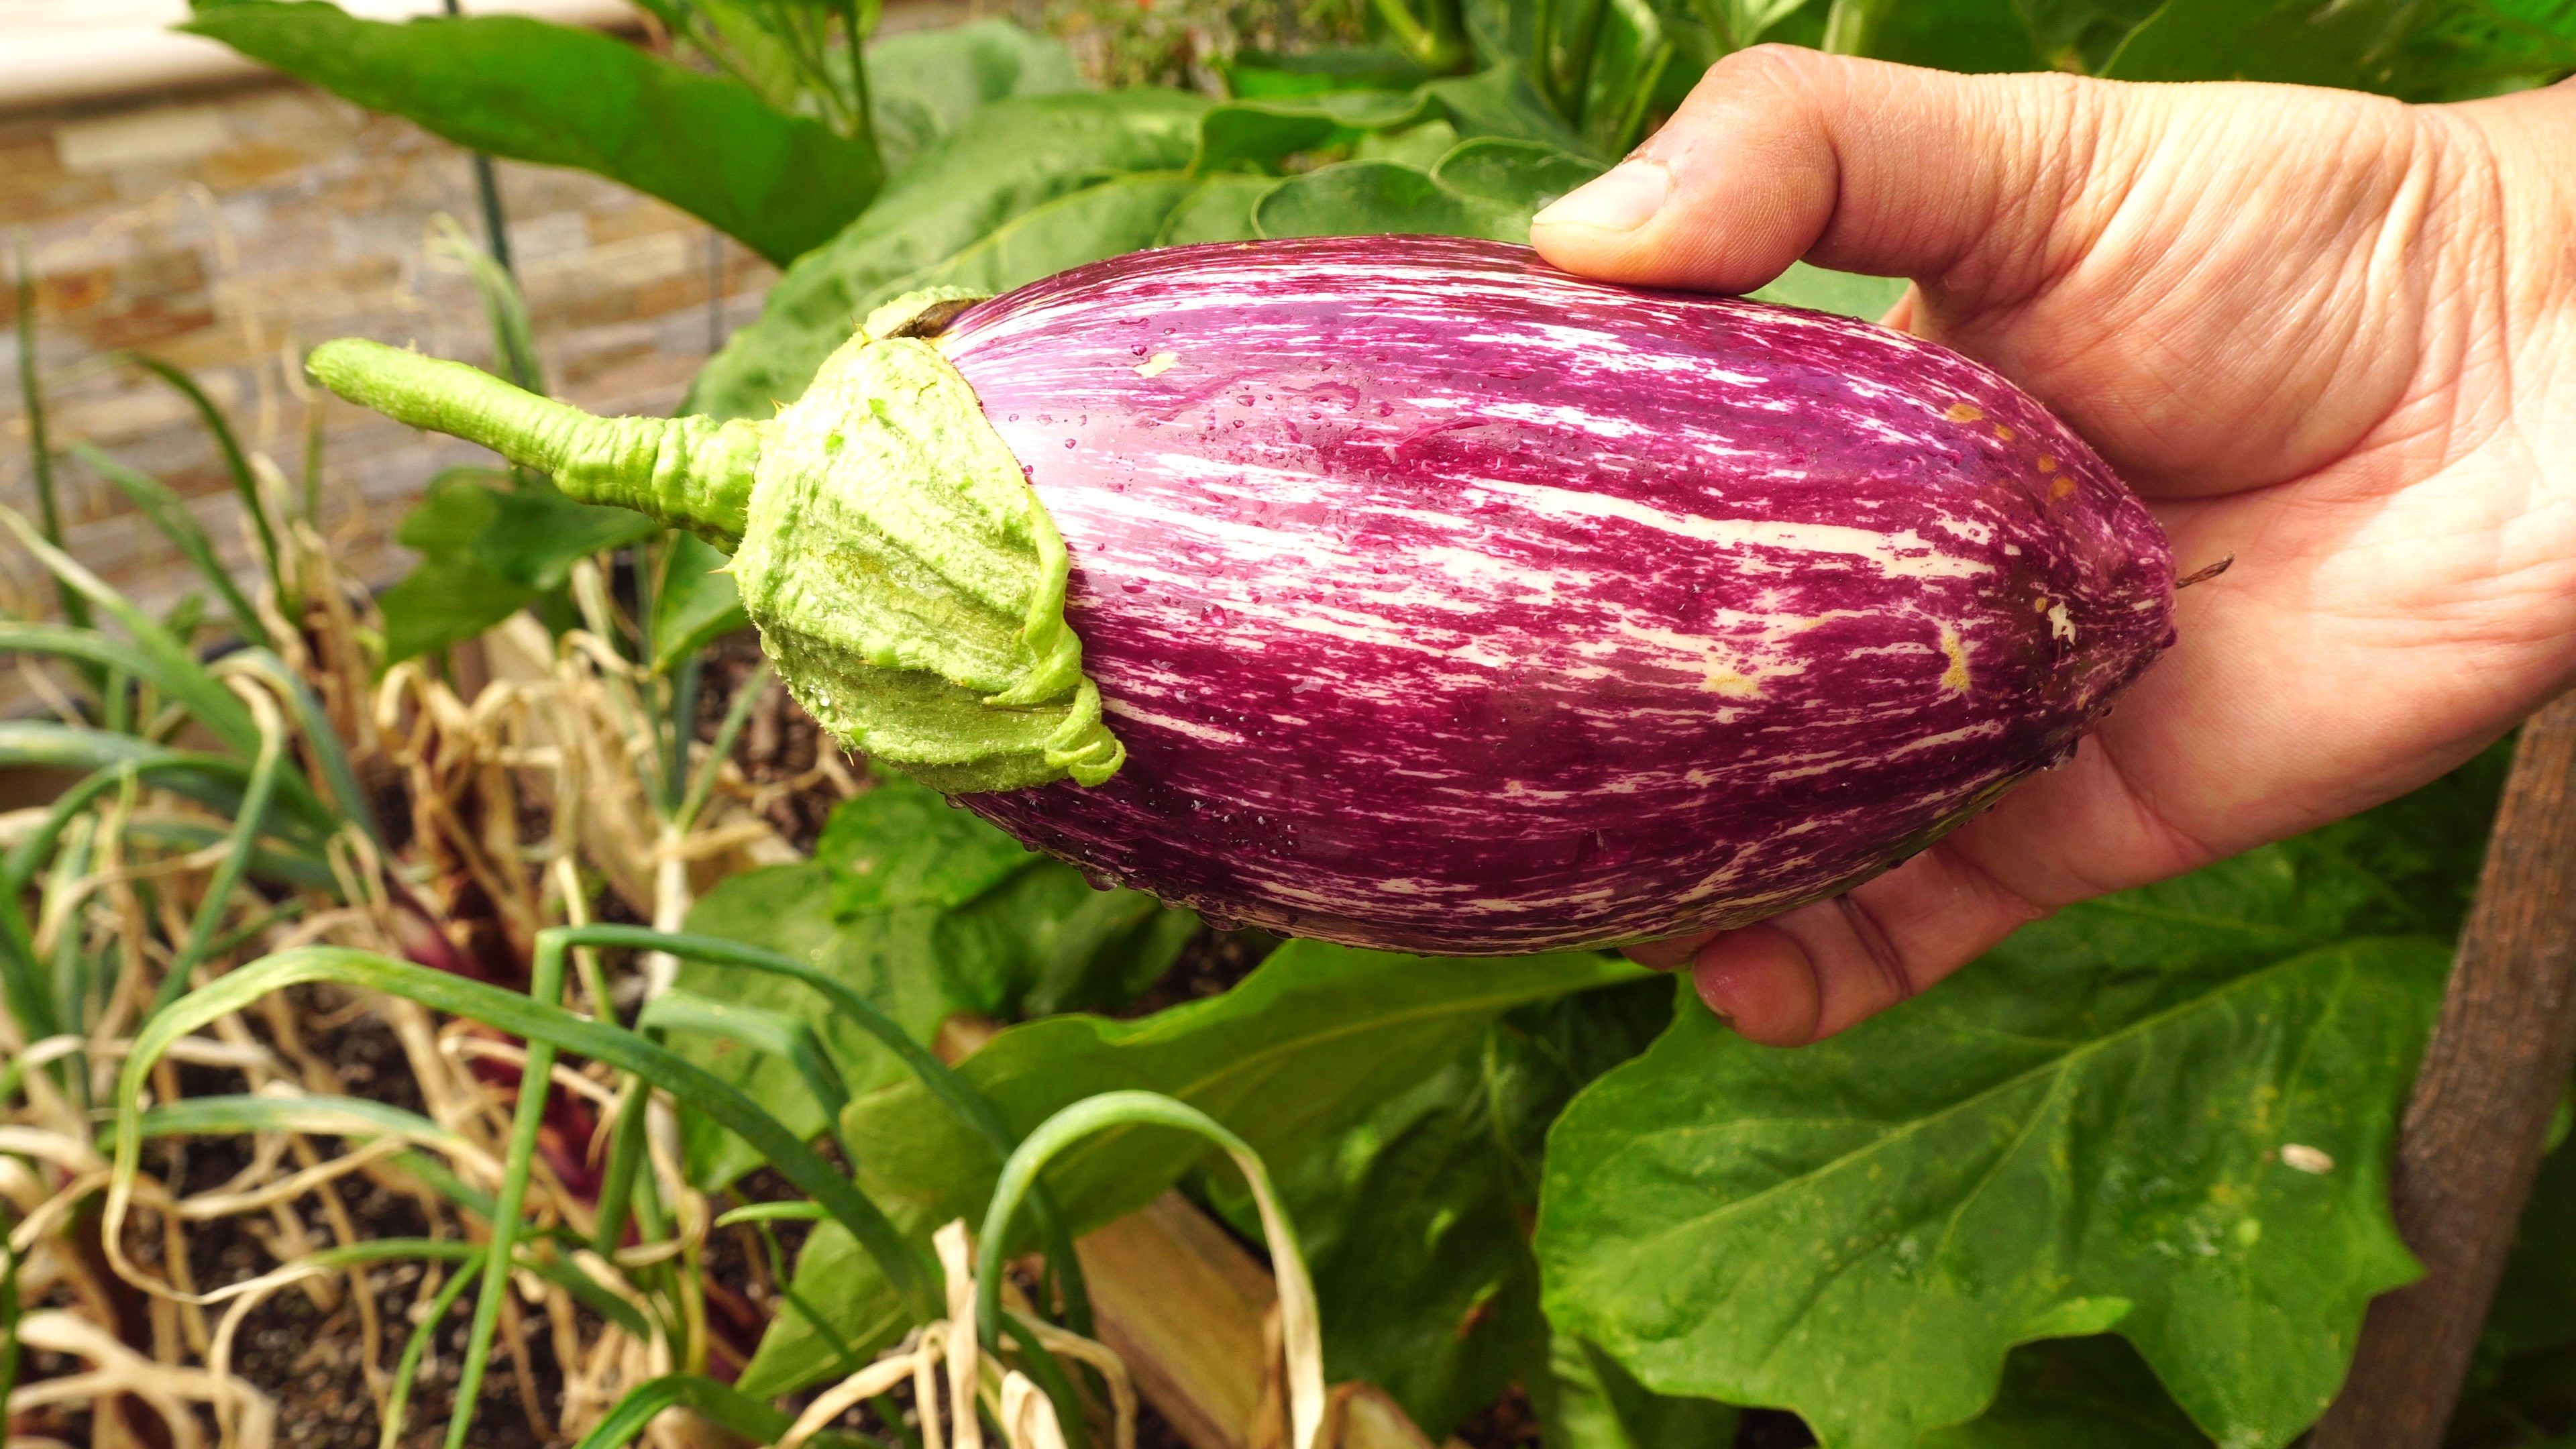 How To Grow Eggplants – A Complete Guide To Growing Eggplants (Solanum Melongena) + RECIPE!